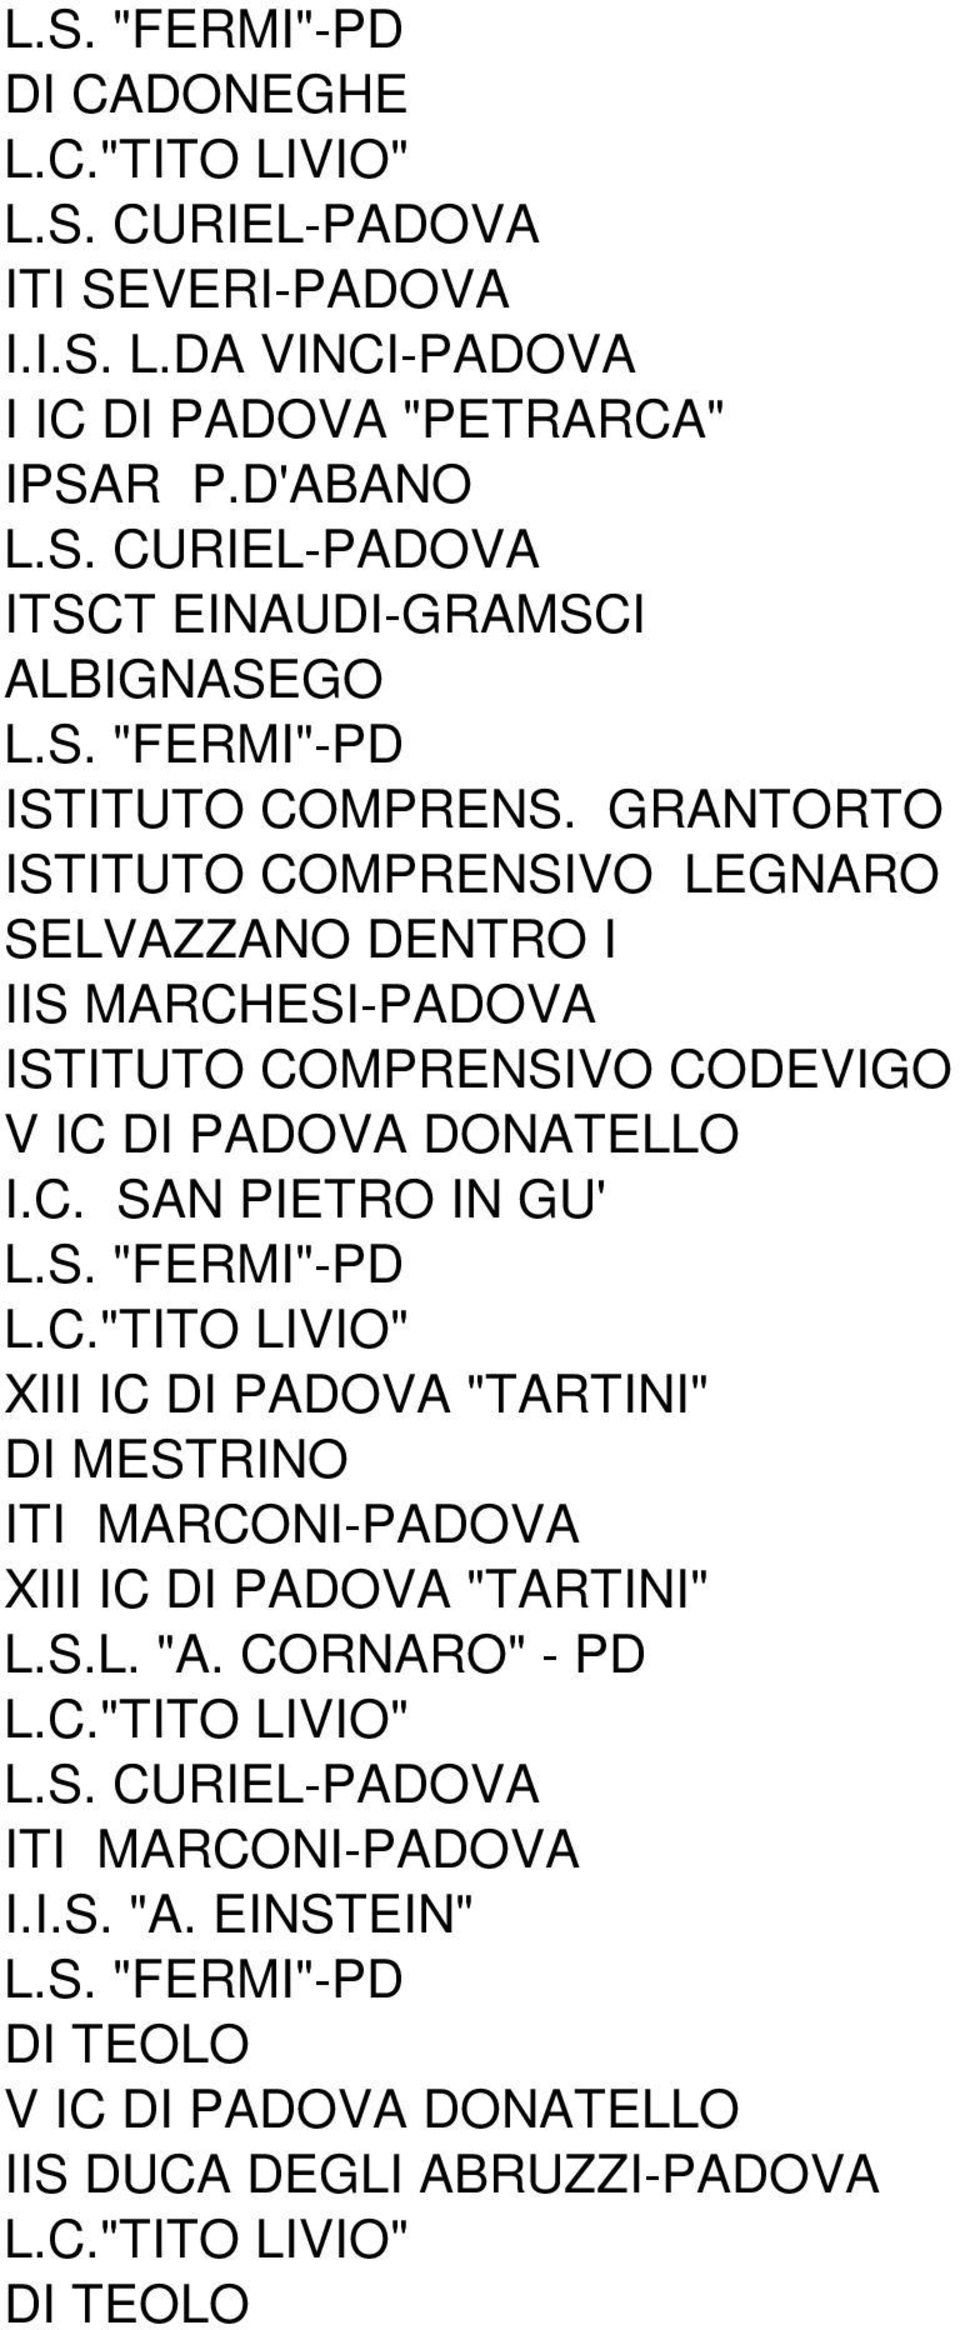 DONATELLO I.C. SAN PIETRO IN GU' XIII IC DI PADOVA "TARTINI" DI MESTRINO ITI MARCONI-PADOVA XIII IC DI PADOVA "TARTINI" L.S.L. "A.